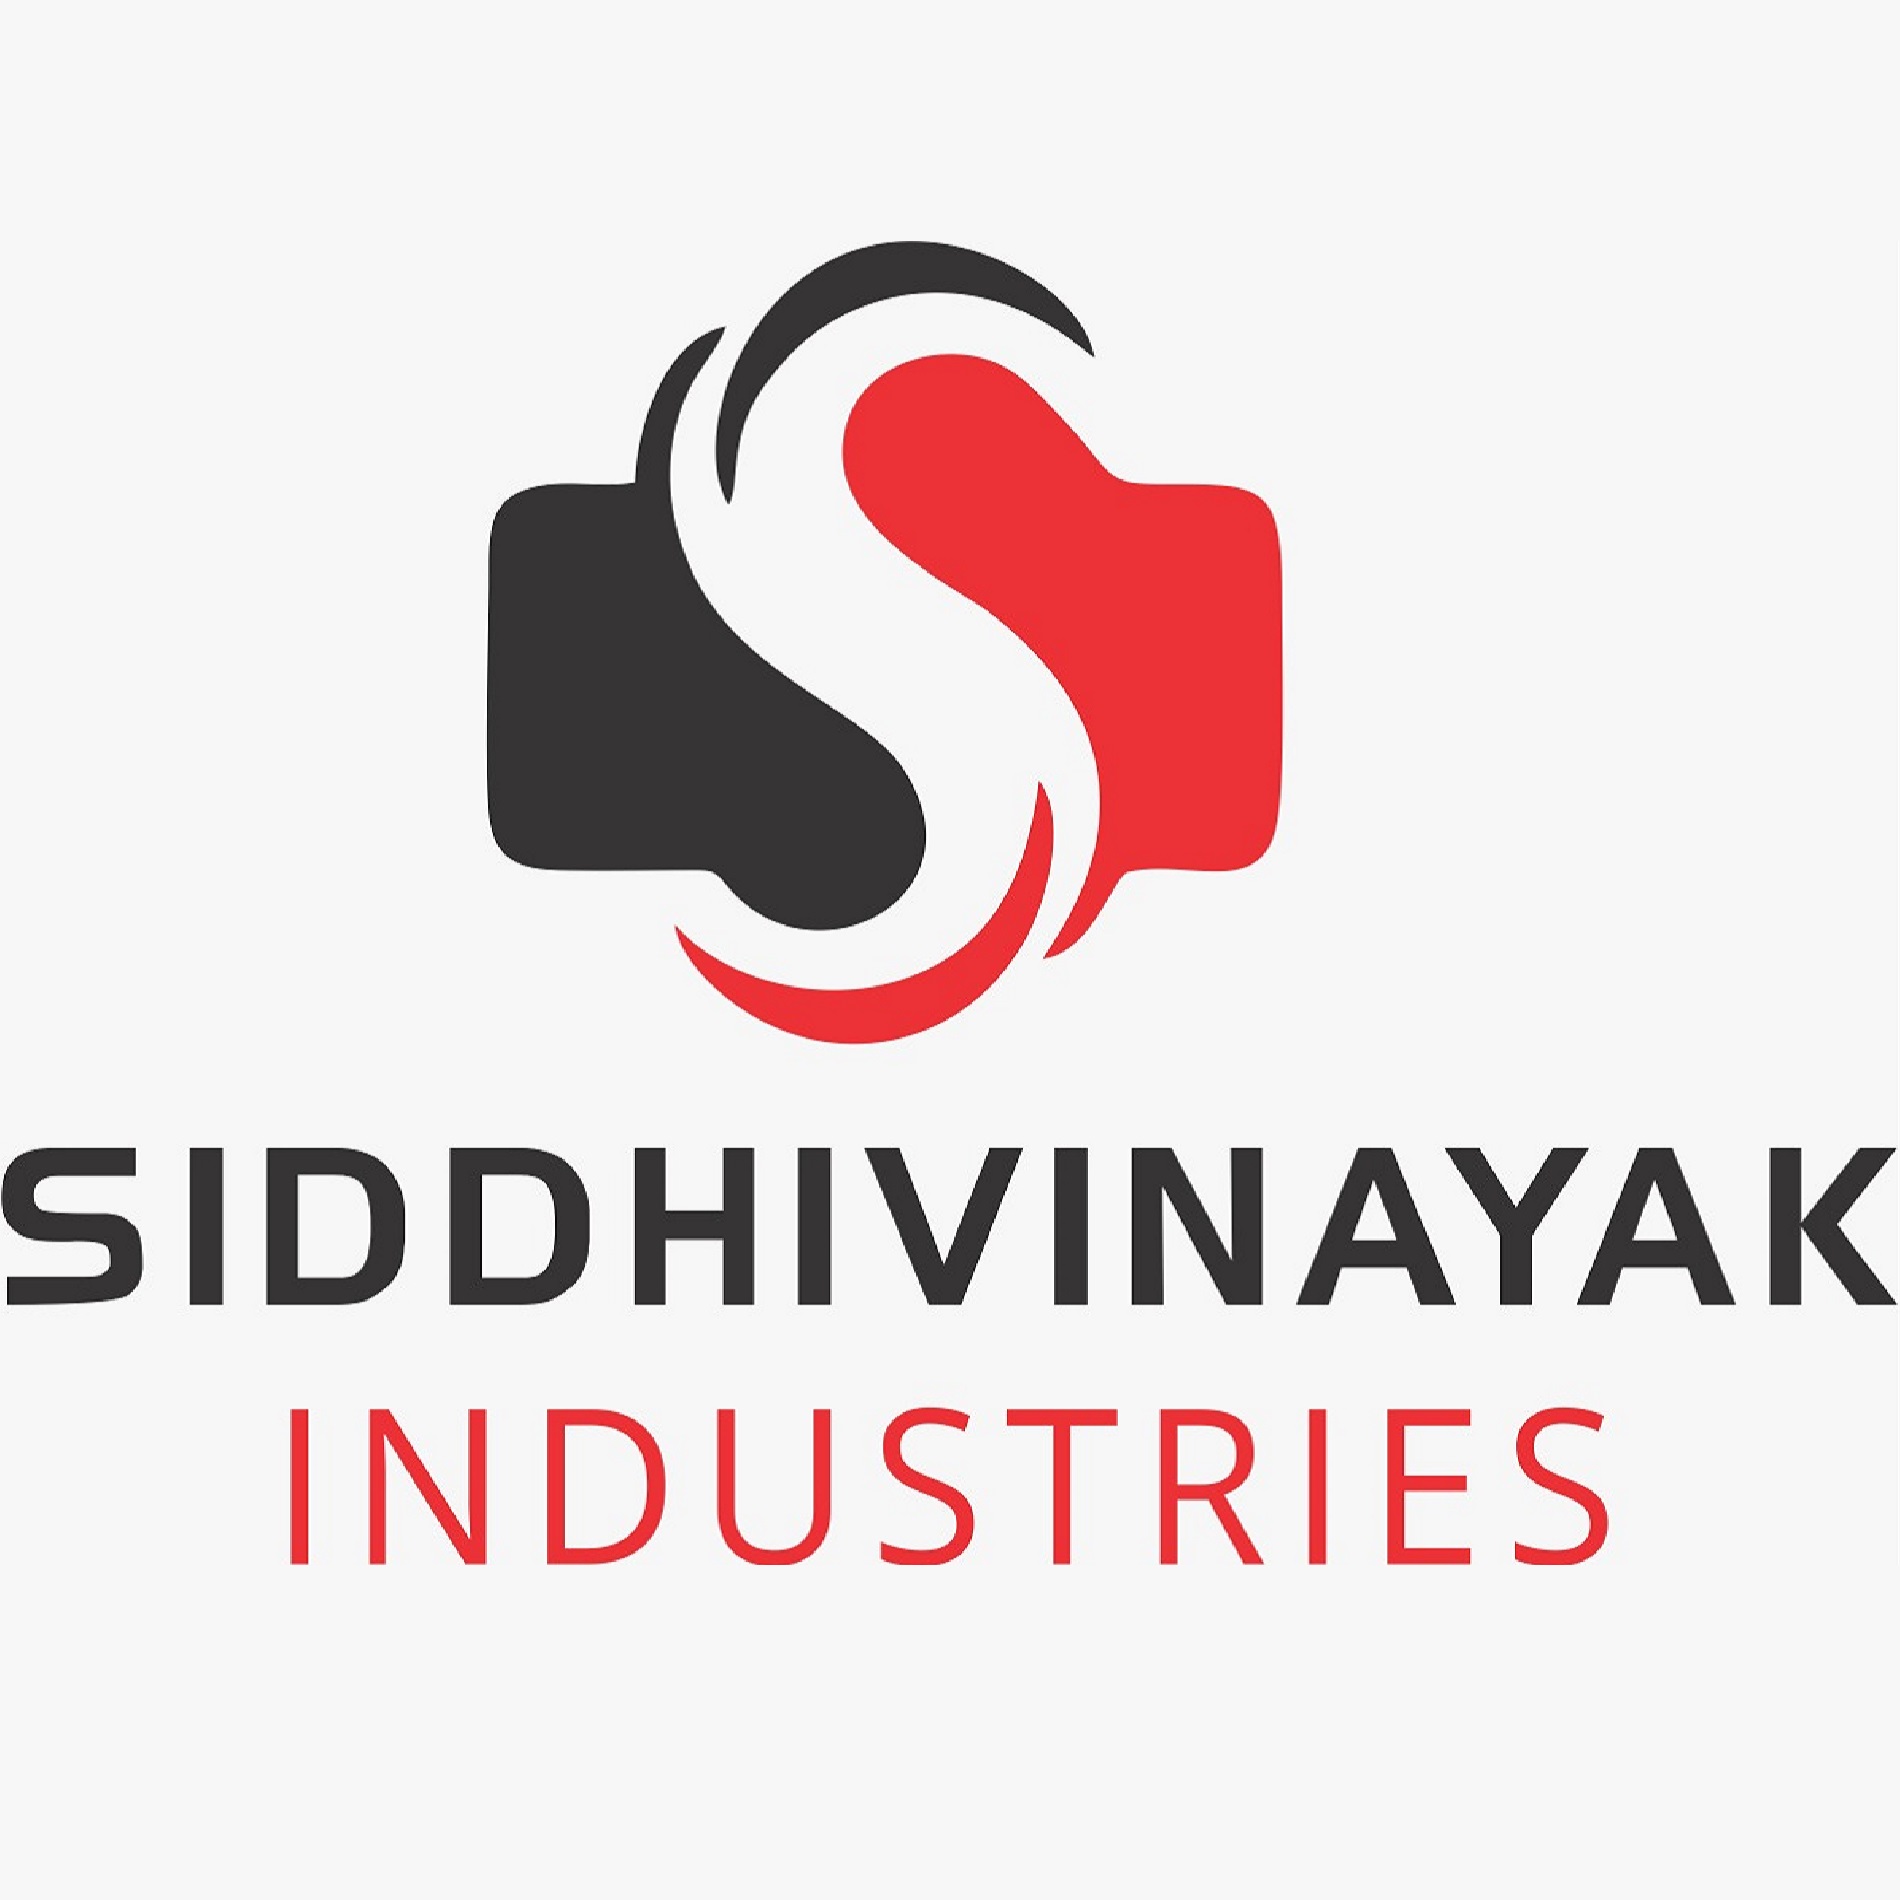 Siddhivinayak Industries|Industrial Suppliers|Industrial Services